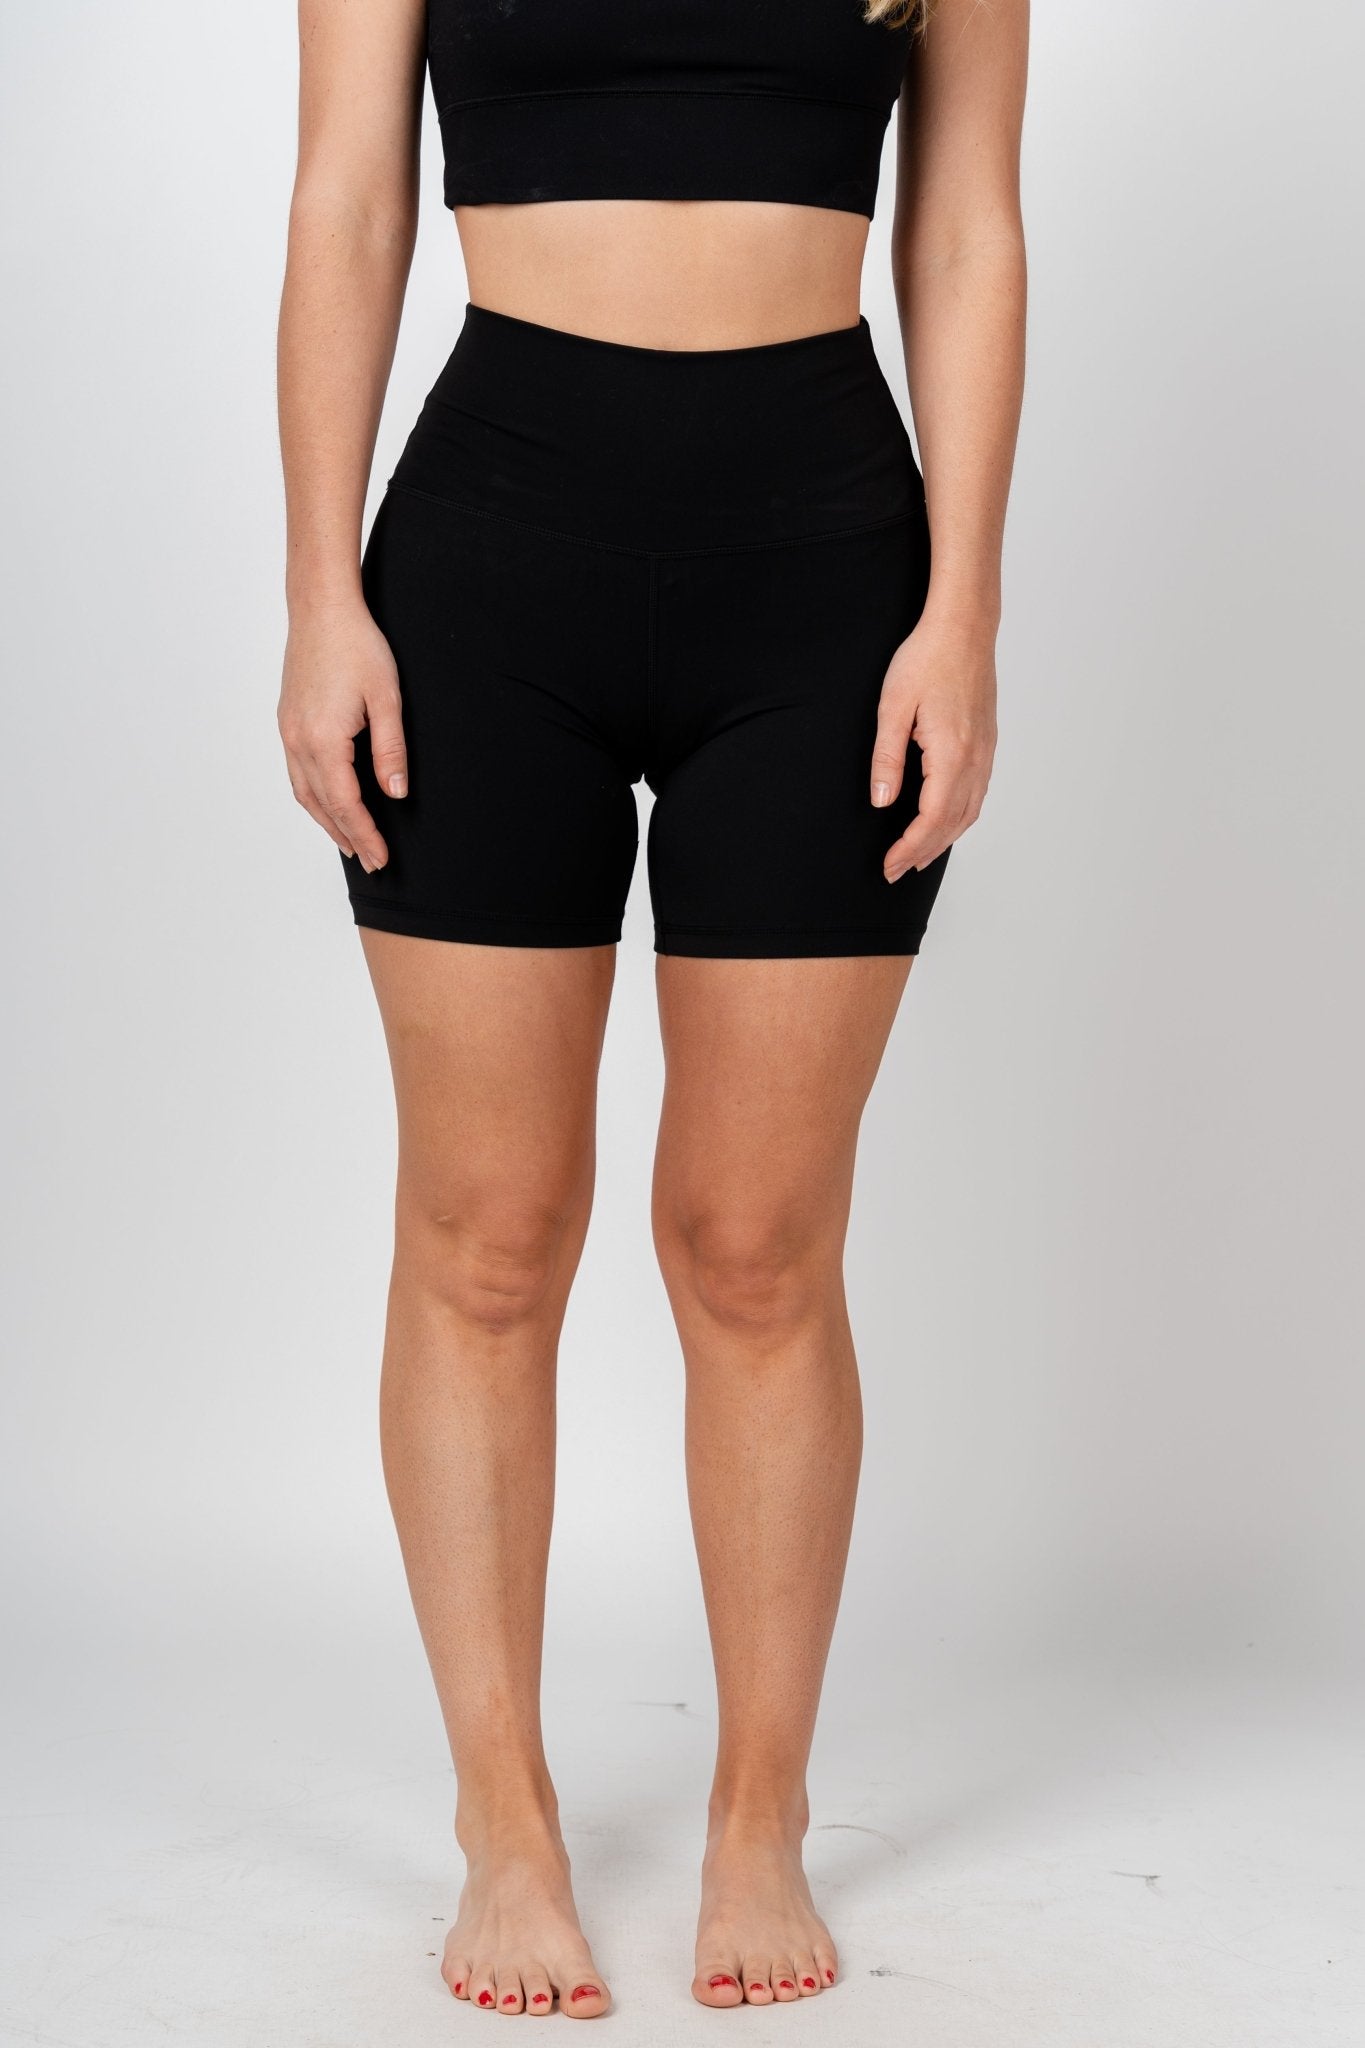 6 inch inseam biker shorts black Stylish biker shorts - Womens Fashion Shorts at Lush Fashion Lounge Boutique in Oklahoma City